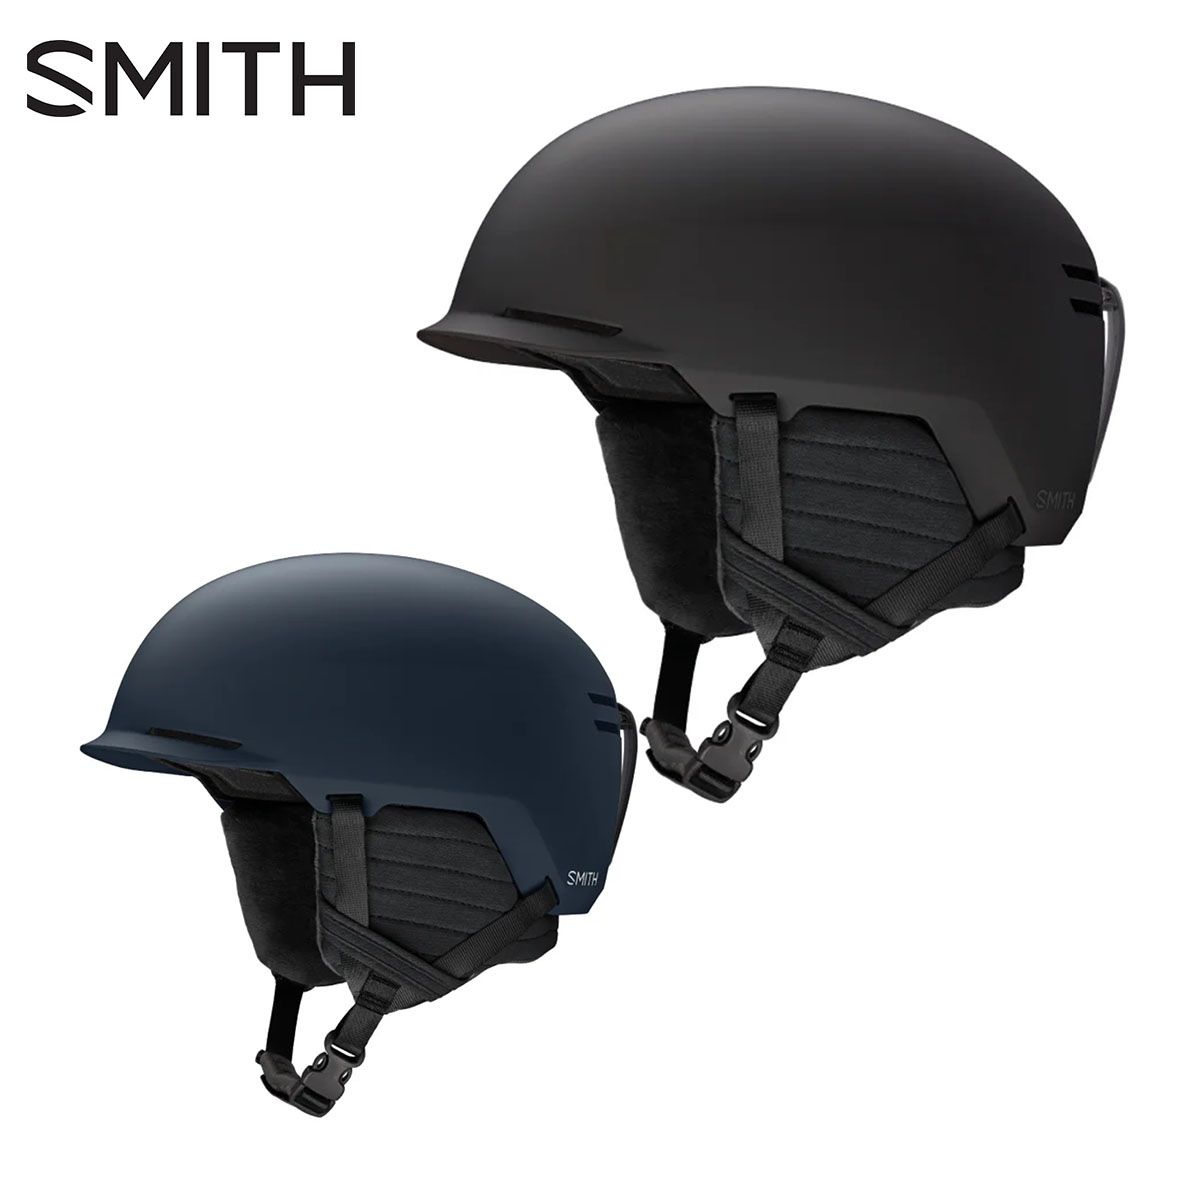 Ski Helmet】SMITH - Ski Shop - Japanese Brand Ski Gear and Skiwear 